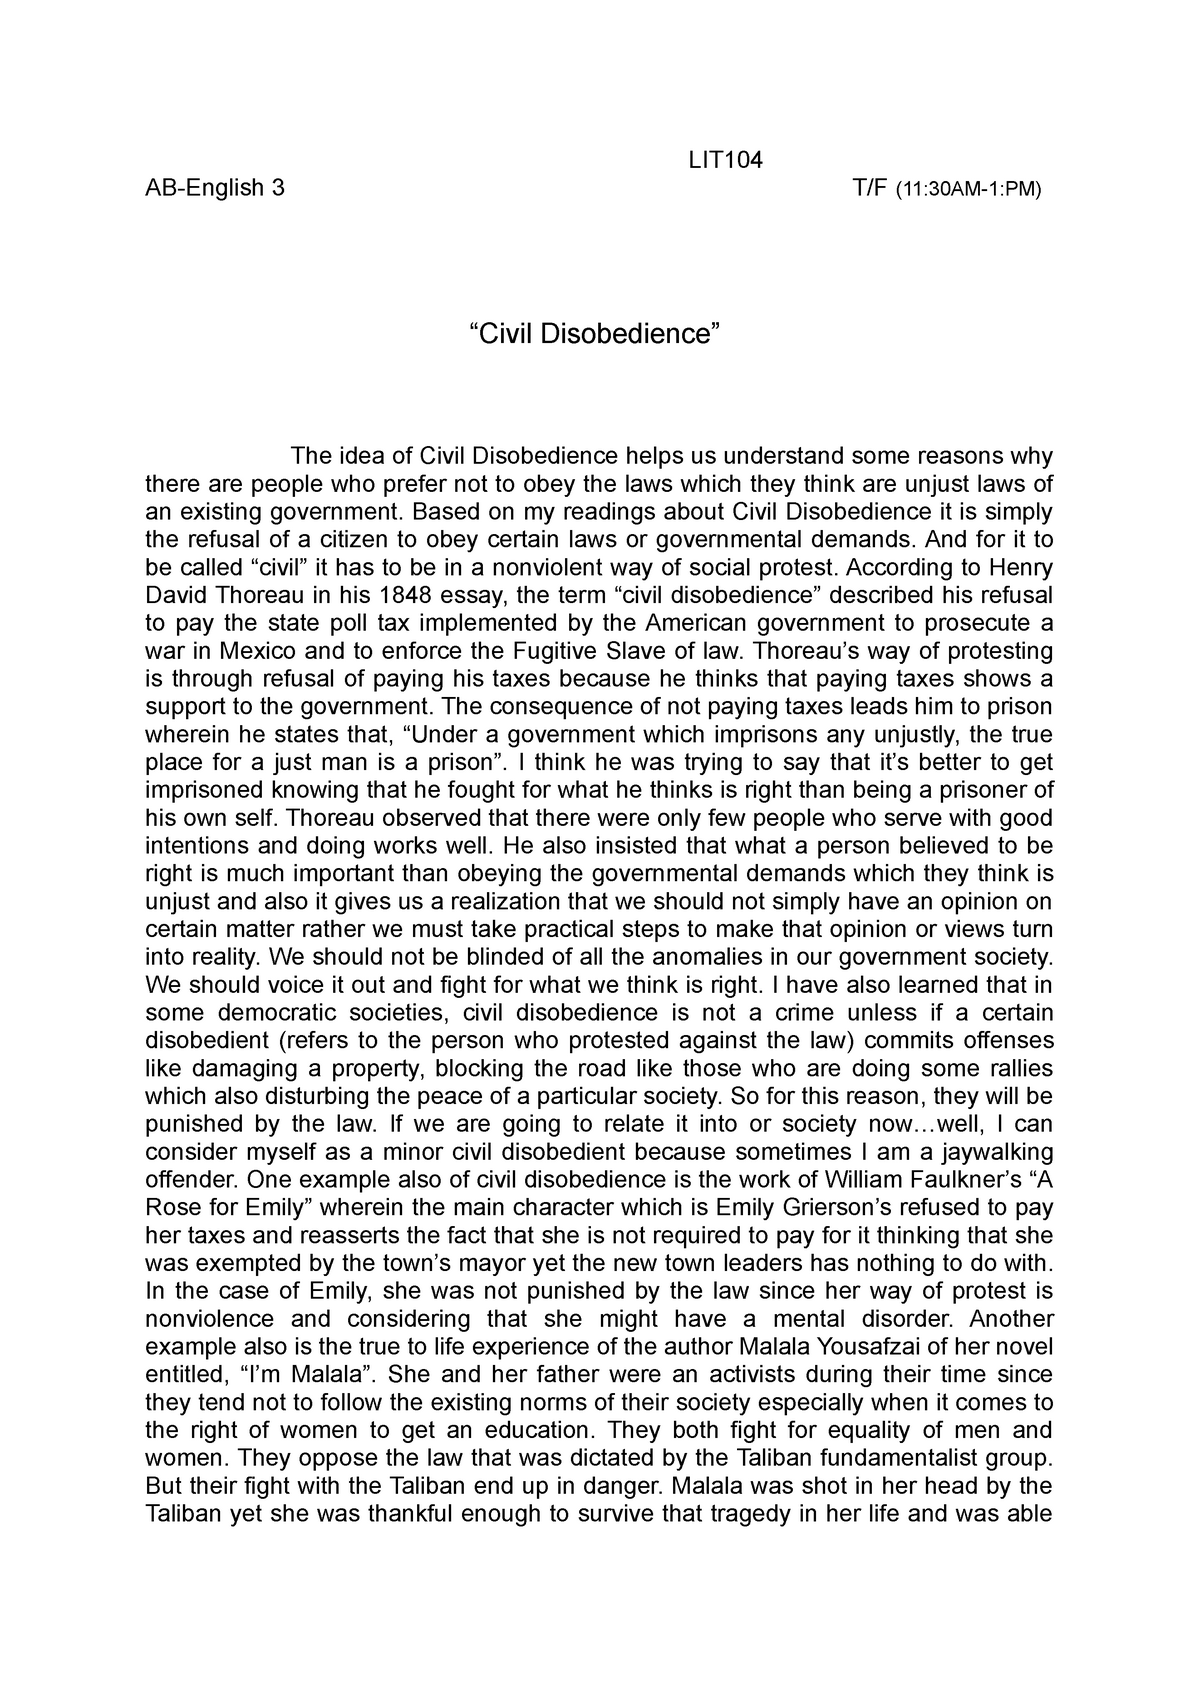 civil disobedience discussion essay